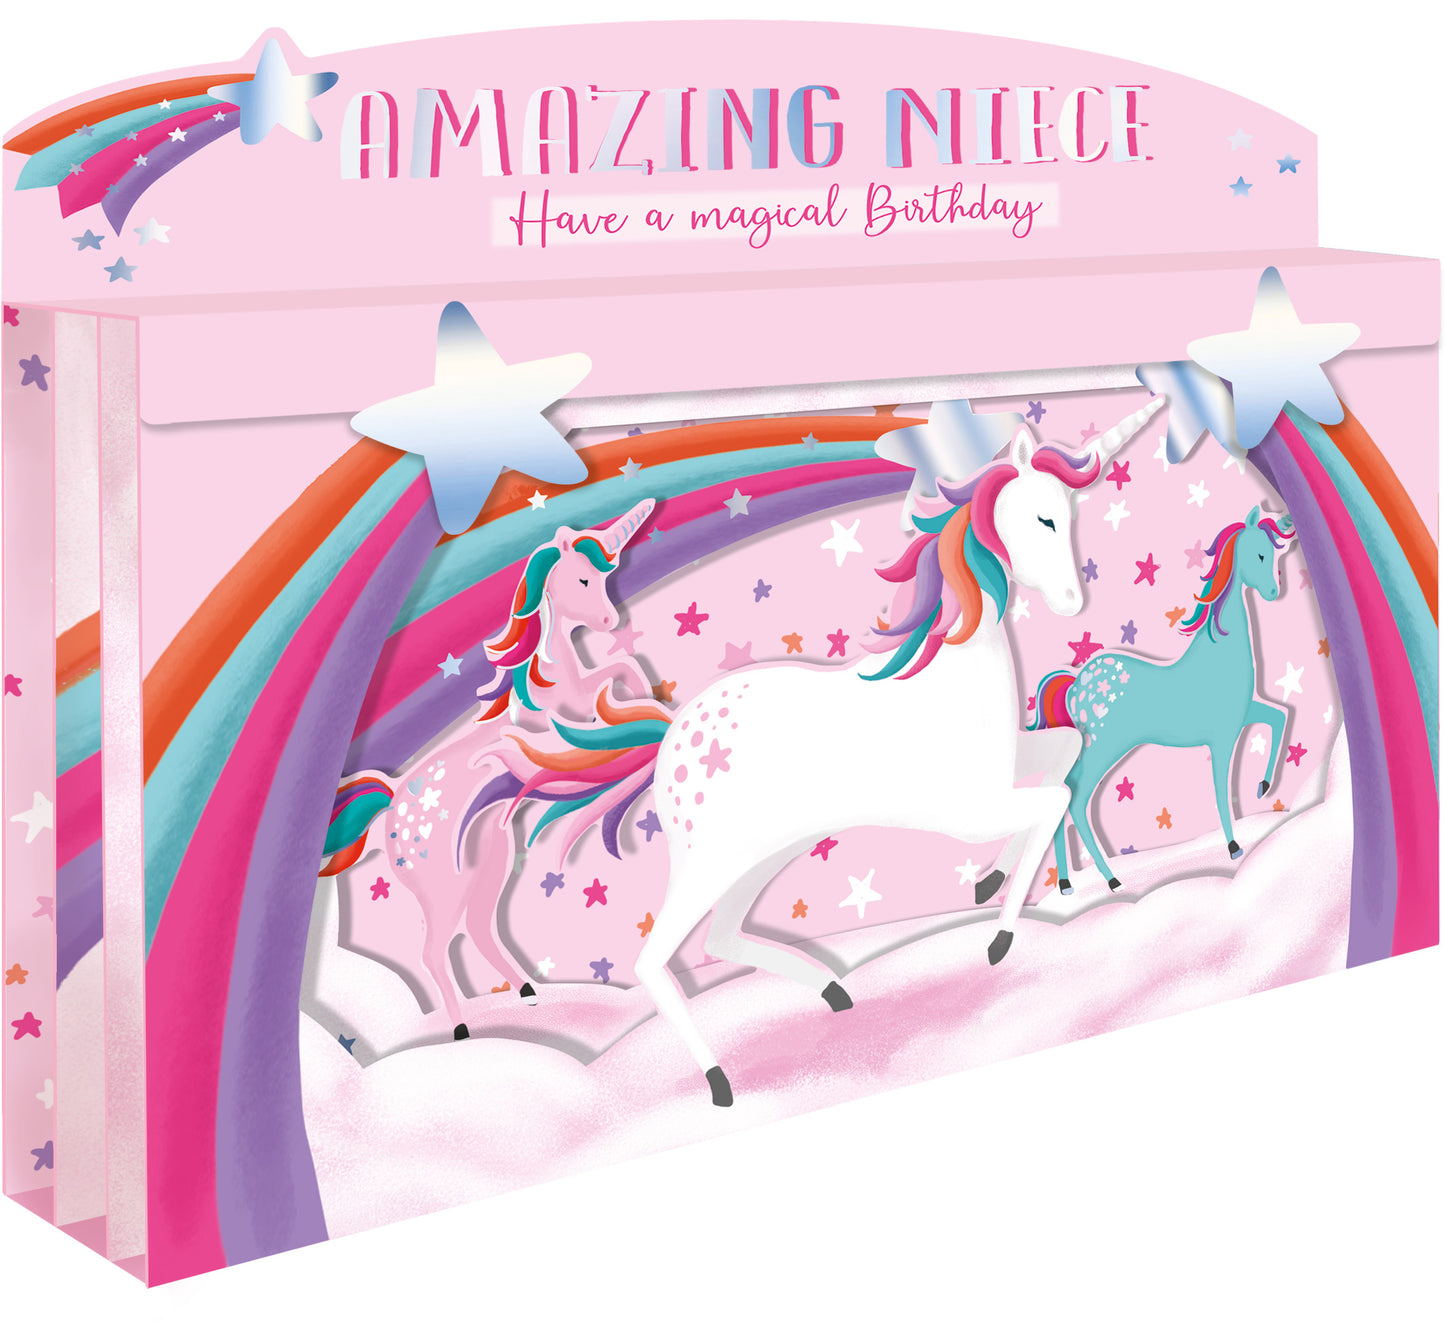 Spectacular 3D Unicorn & Rainbows Amazing Niece Birthday Card